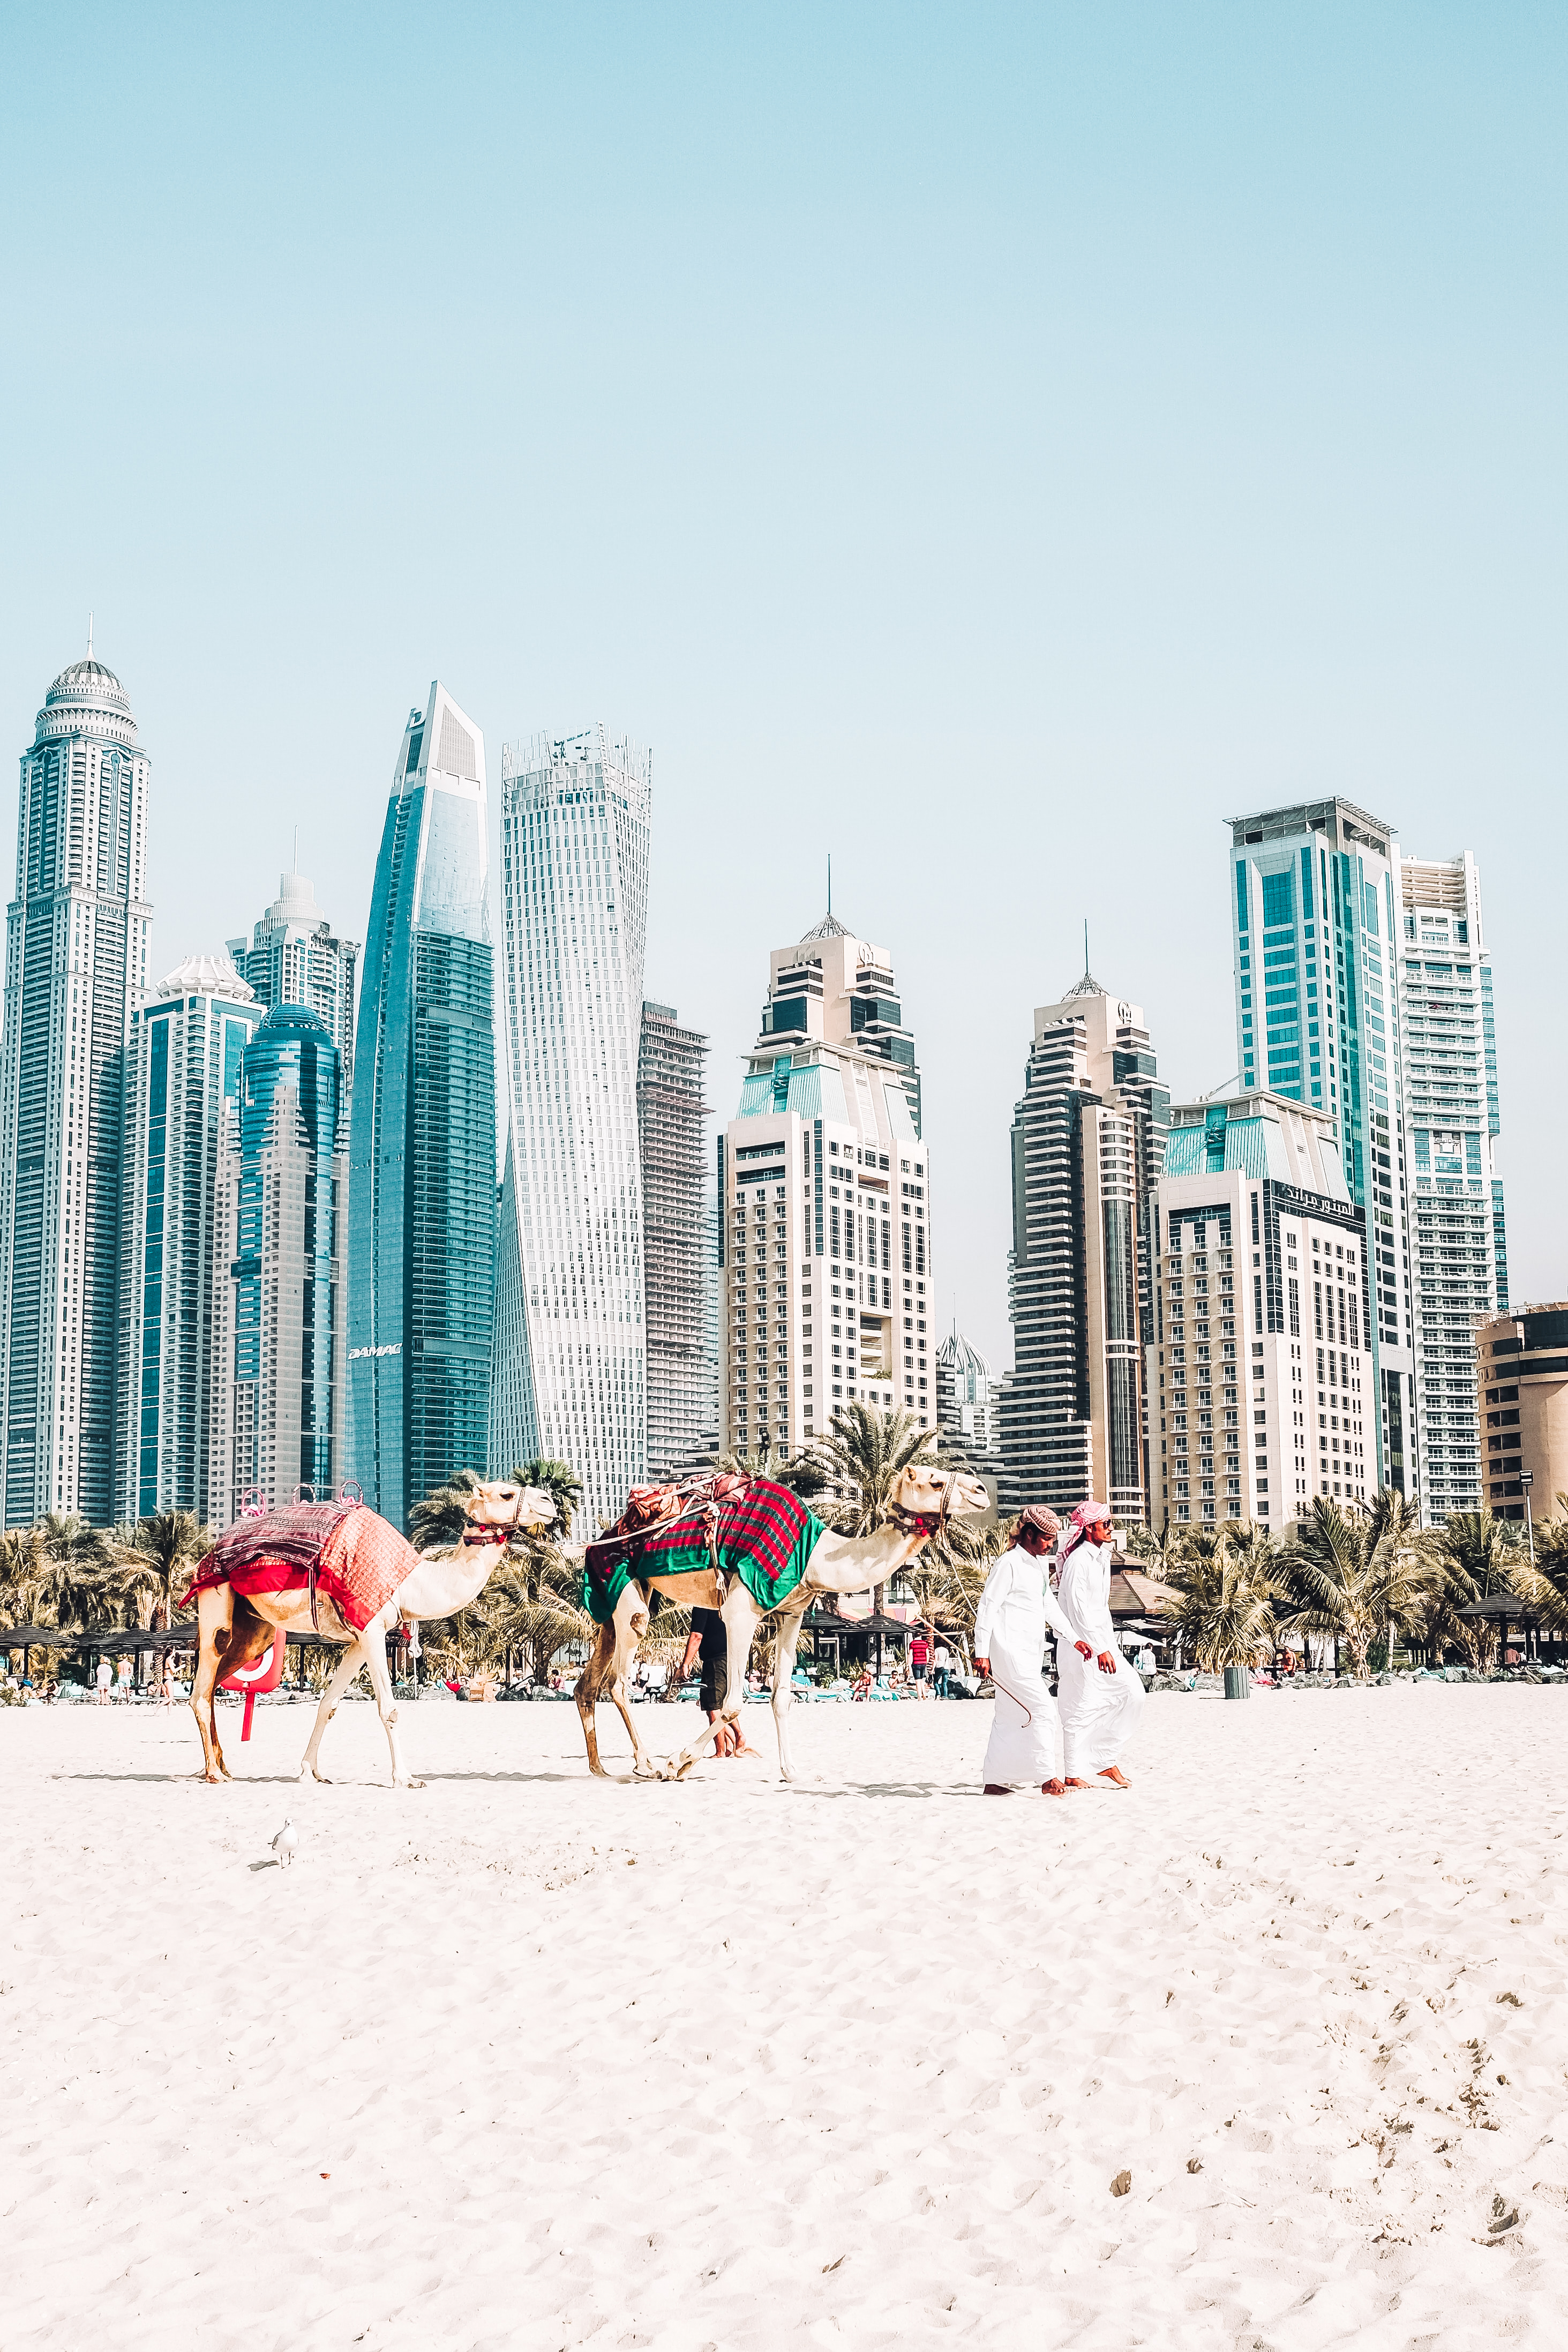 Dubai skyline and beach with camels walking across the sand